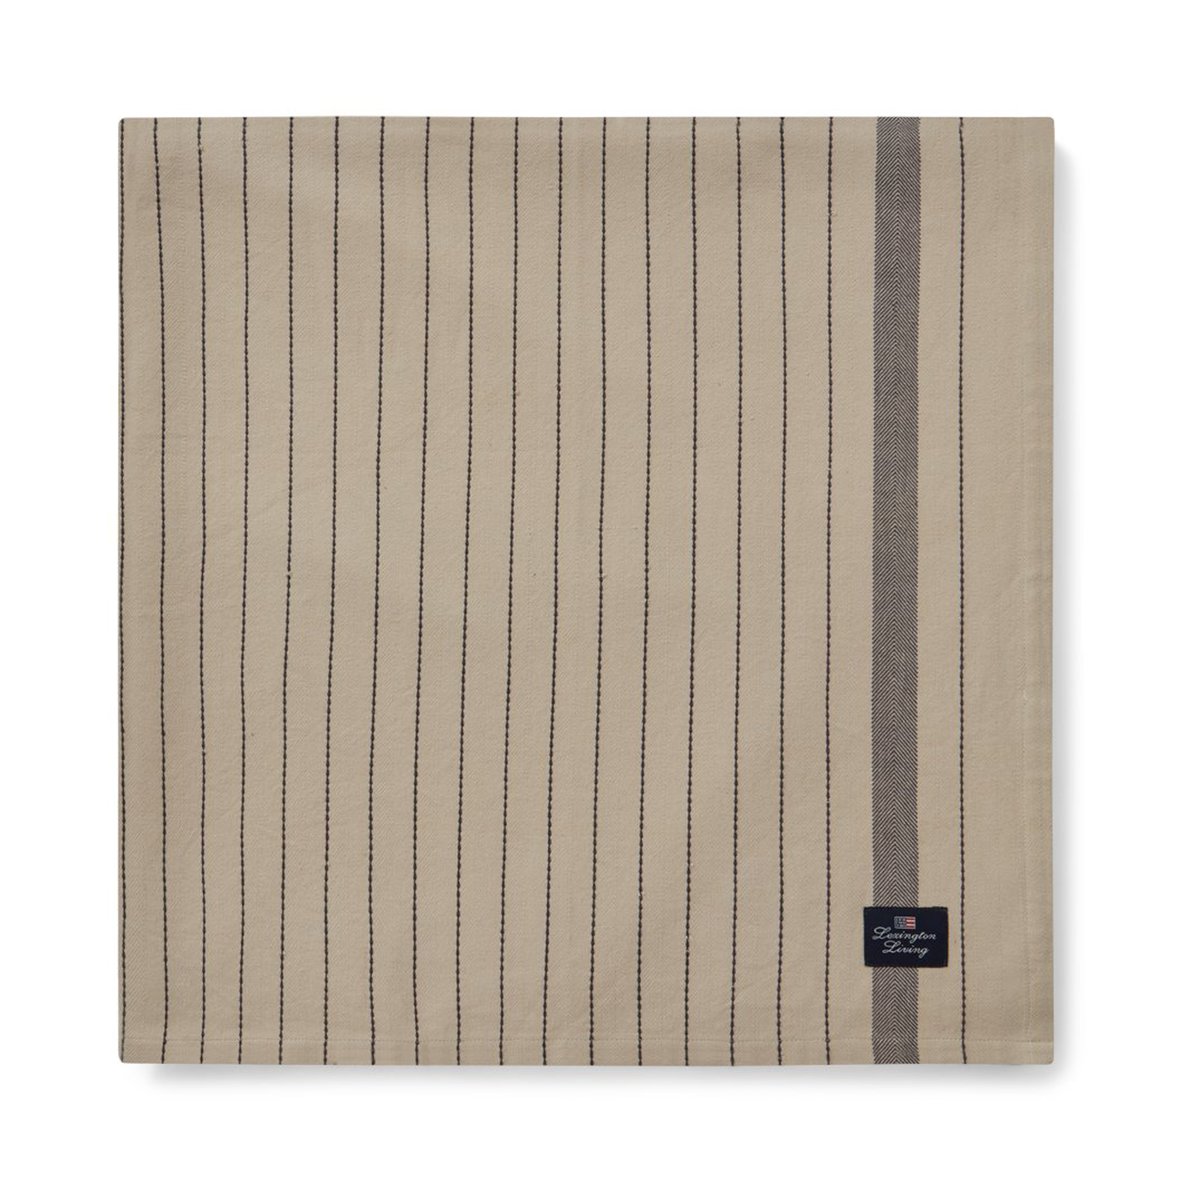 Lexington Striped Organic Cotton borddug 150×250 cm Beige/Dark gray